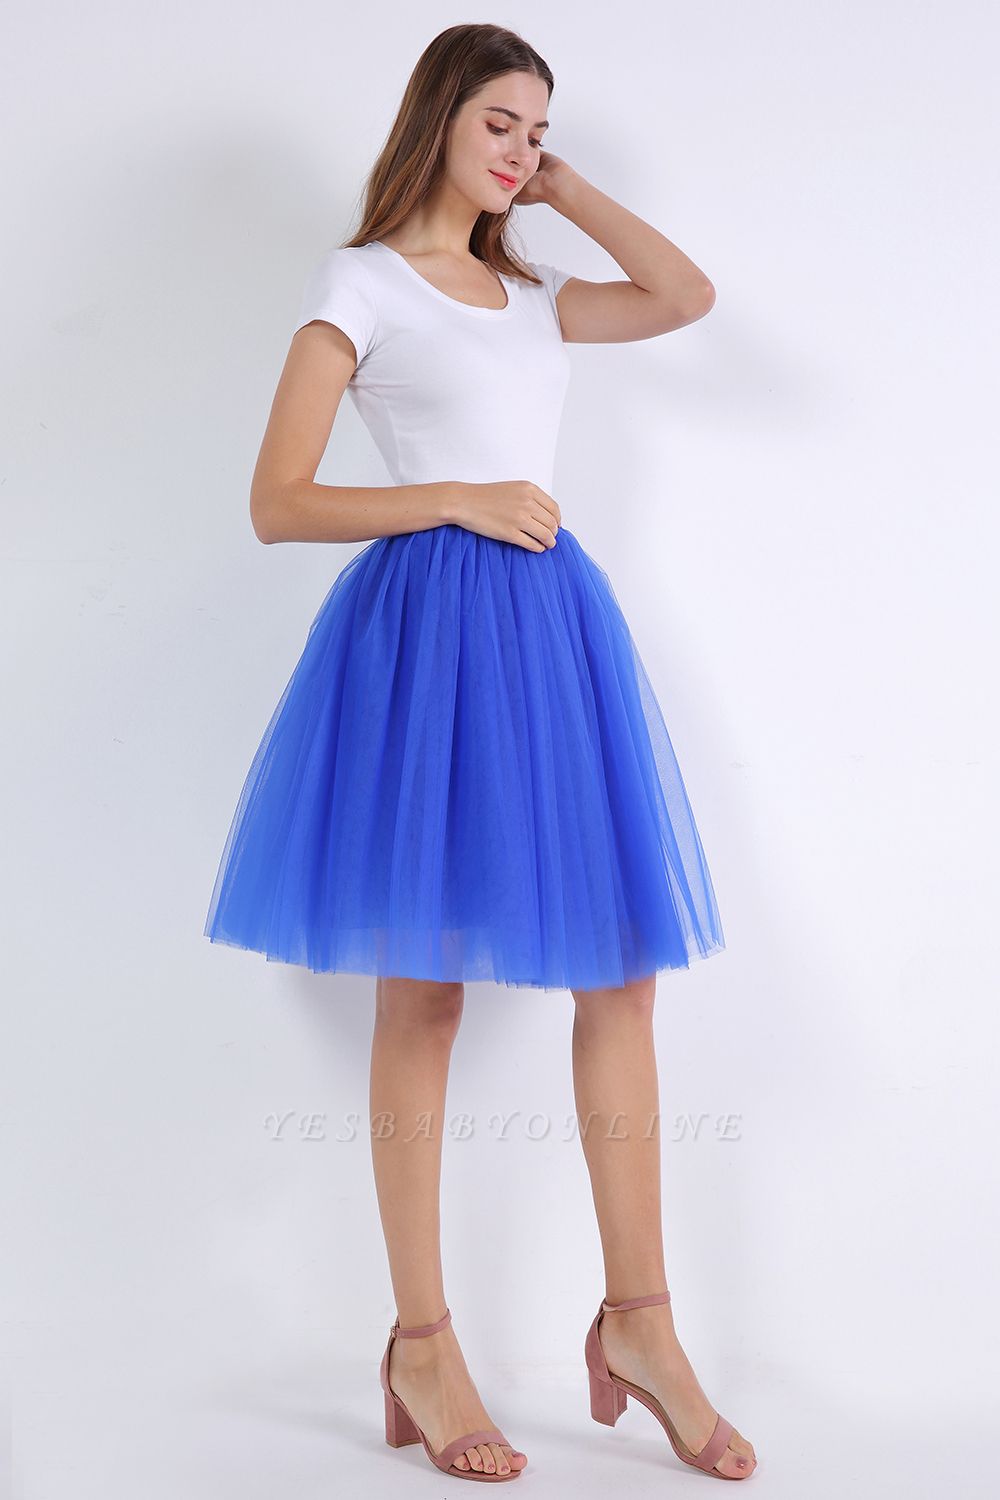 Royal Blue Princess Ball Gown Skirt ...